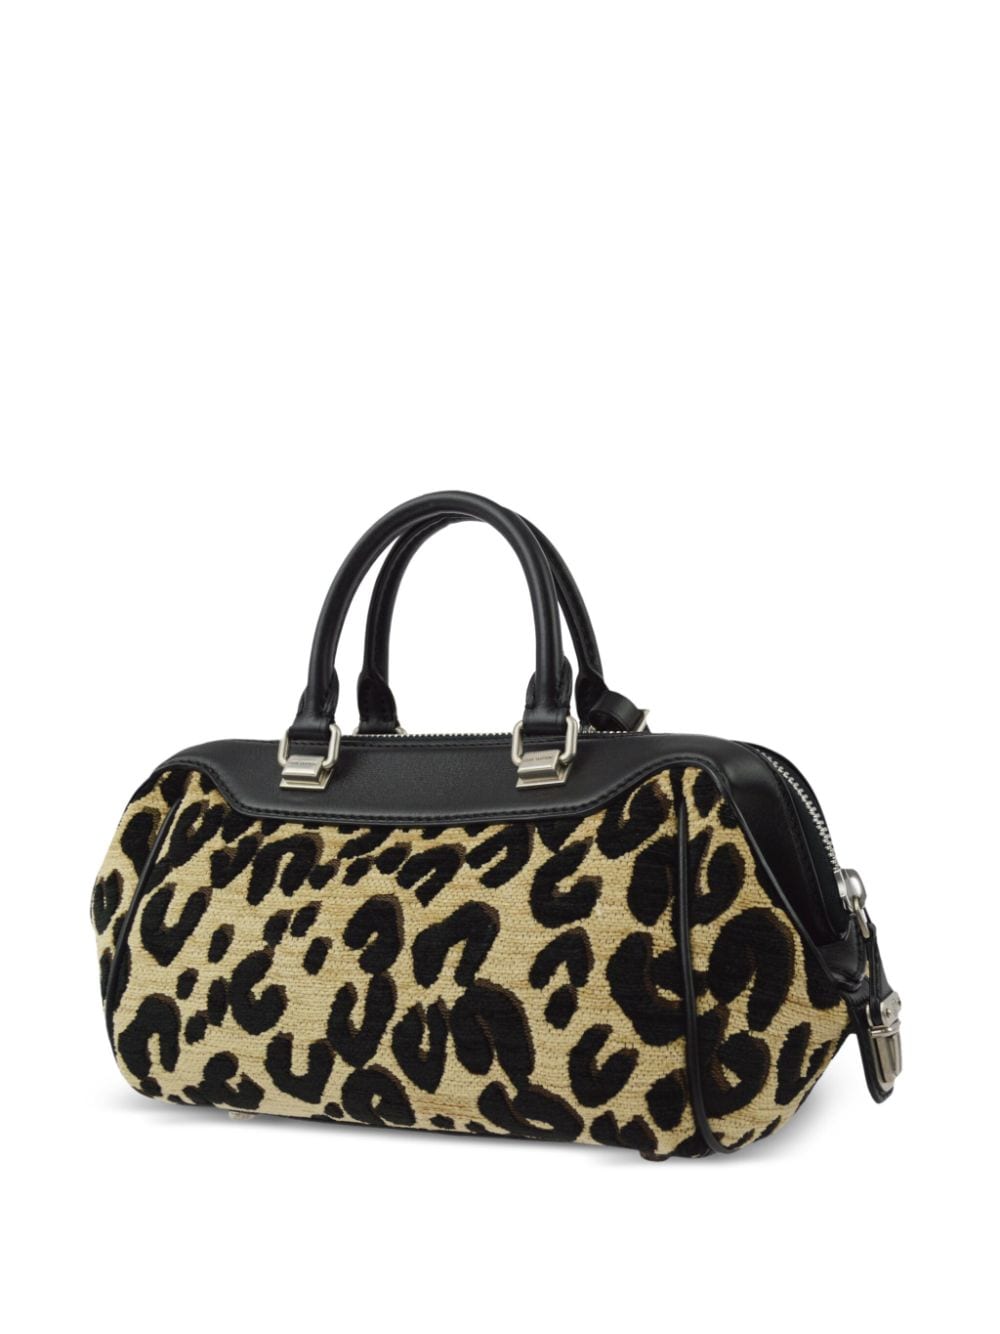 Pre-owned Louis Vuitton 2012 Leopard Baby Handbag In Black